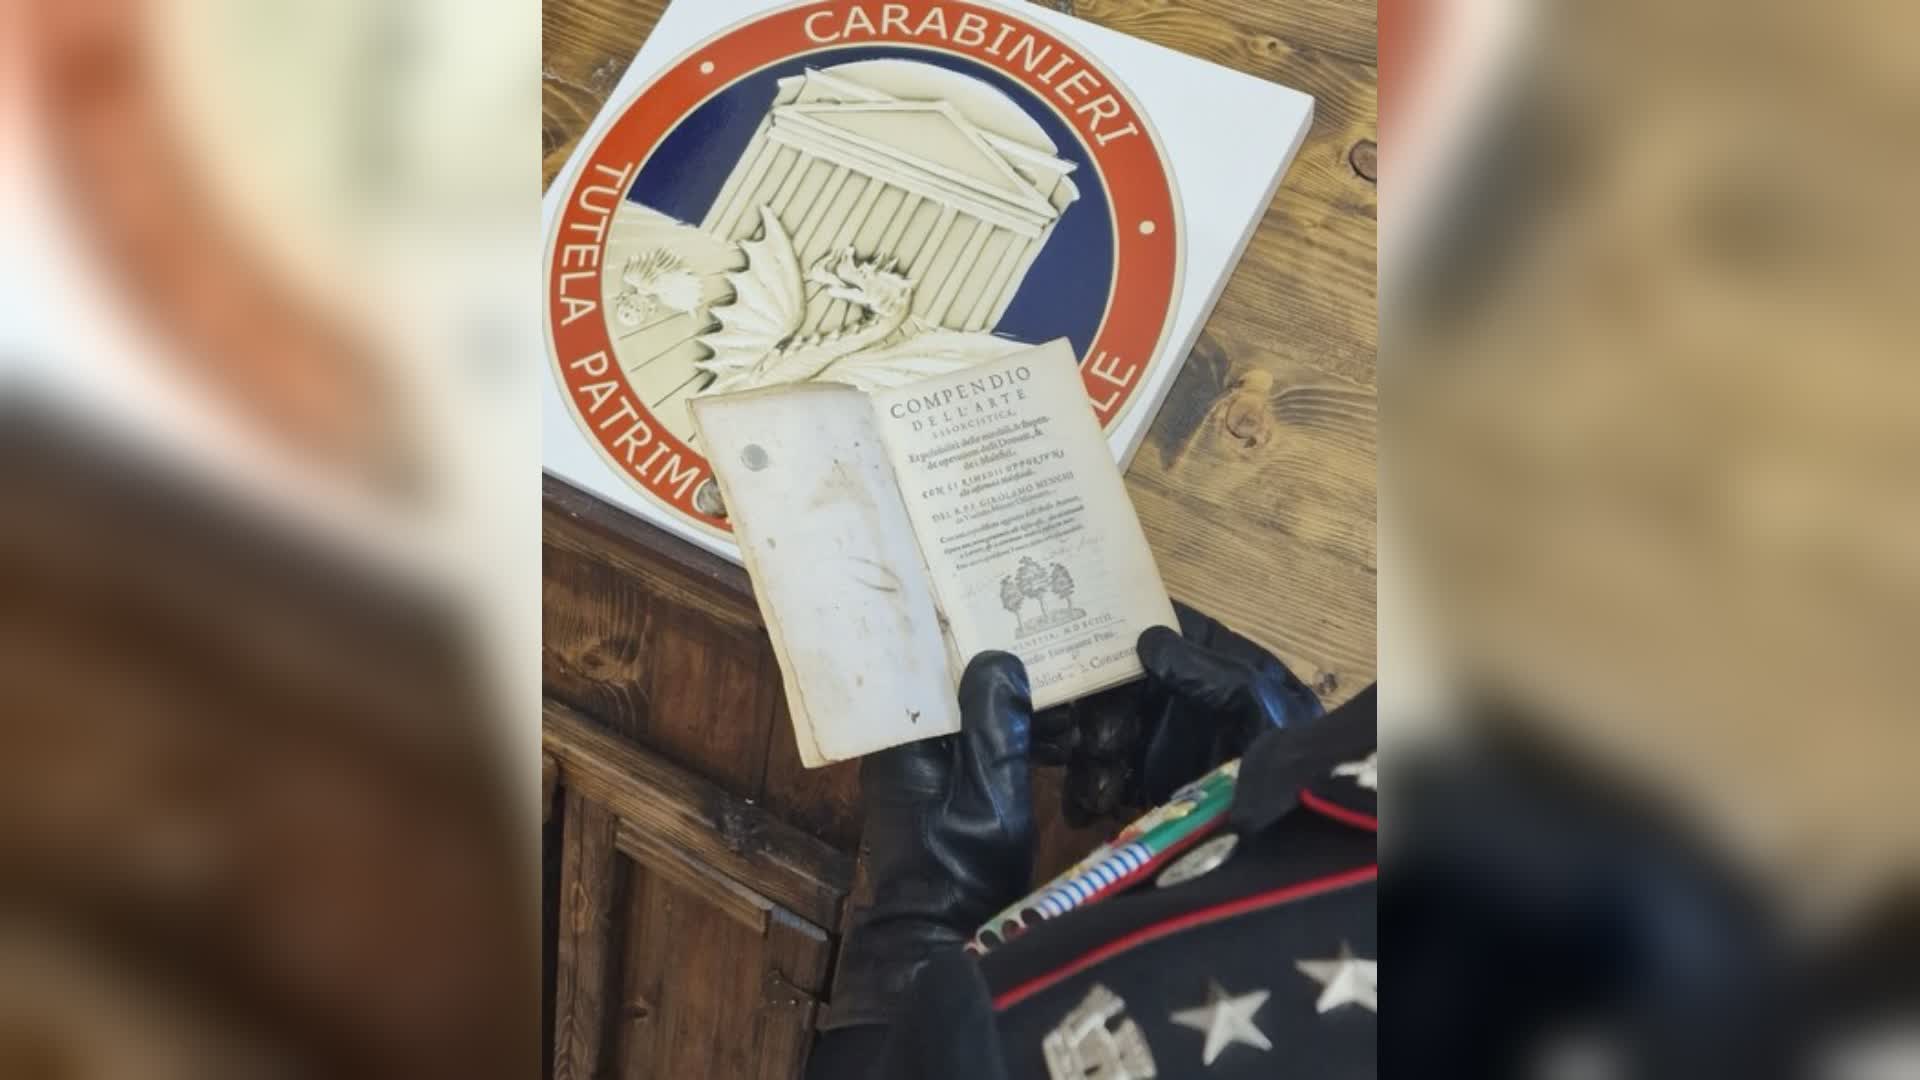 Carabinieri Tutela Patrimonio restituiscono libro a Sacro Convento